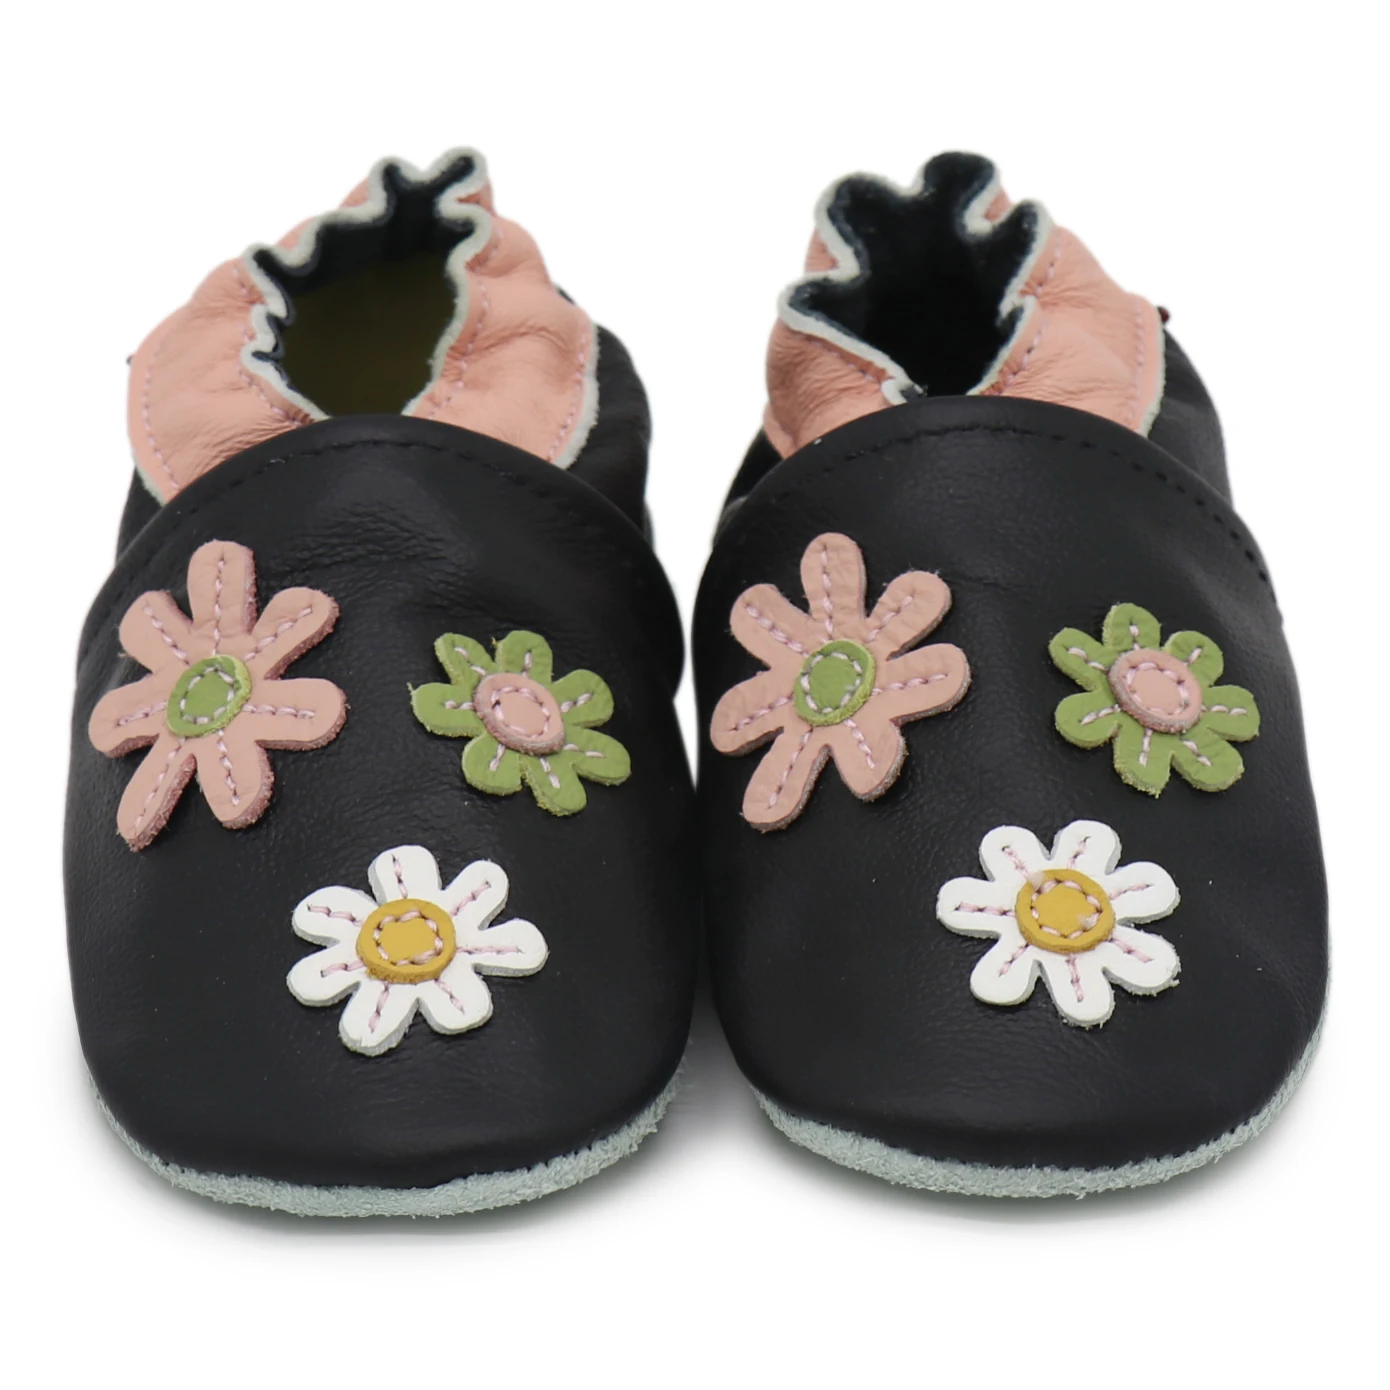 Carozoo Lovely Styles Baby pinze ragazzi First Walker Shoes pelle di mucca Bebe scarpe Prewalker per ragazza spedizione gratuita